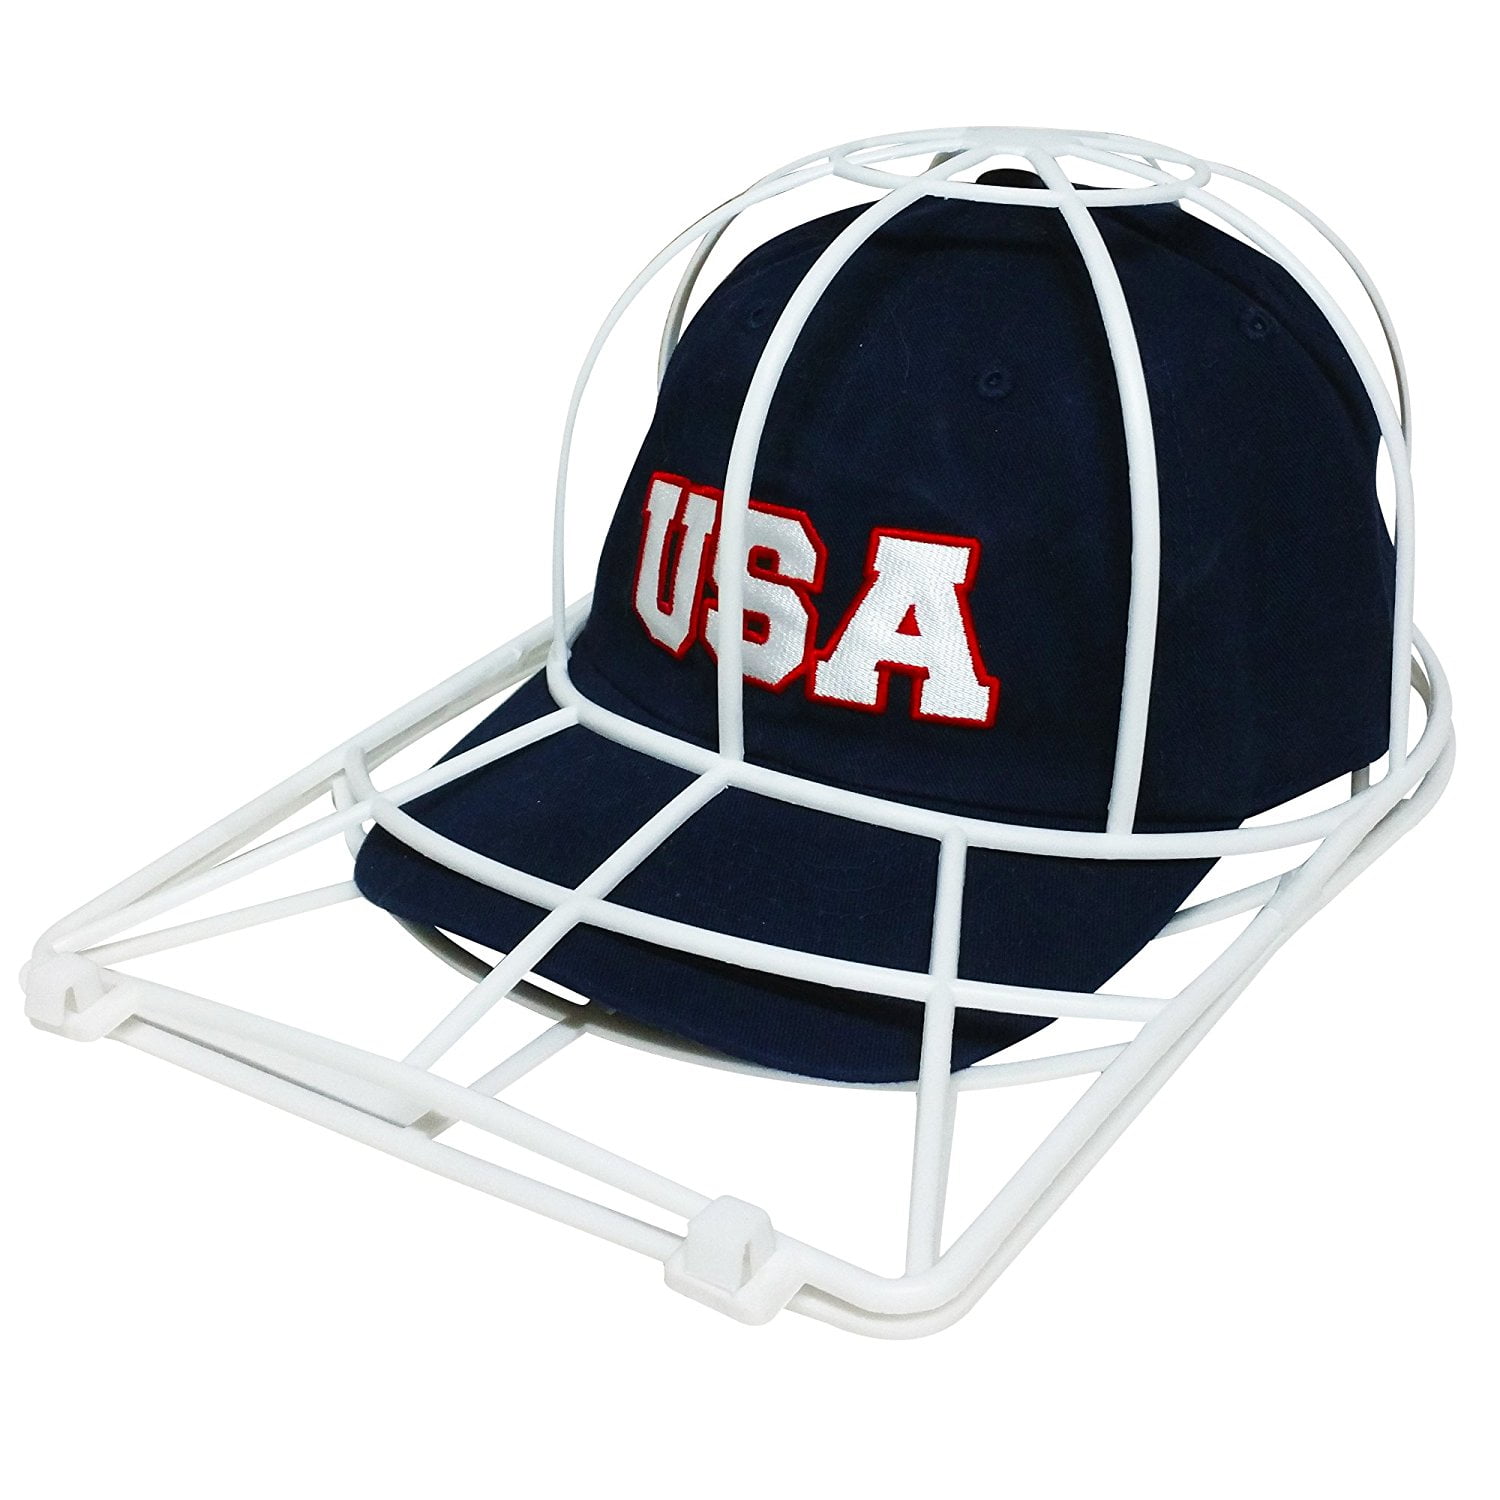 Baseball Hat Washer,3pcs Cap Washer Frame/Washing Cage,White Cap Visors Shaper 